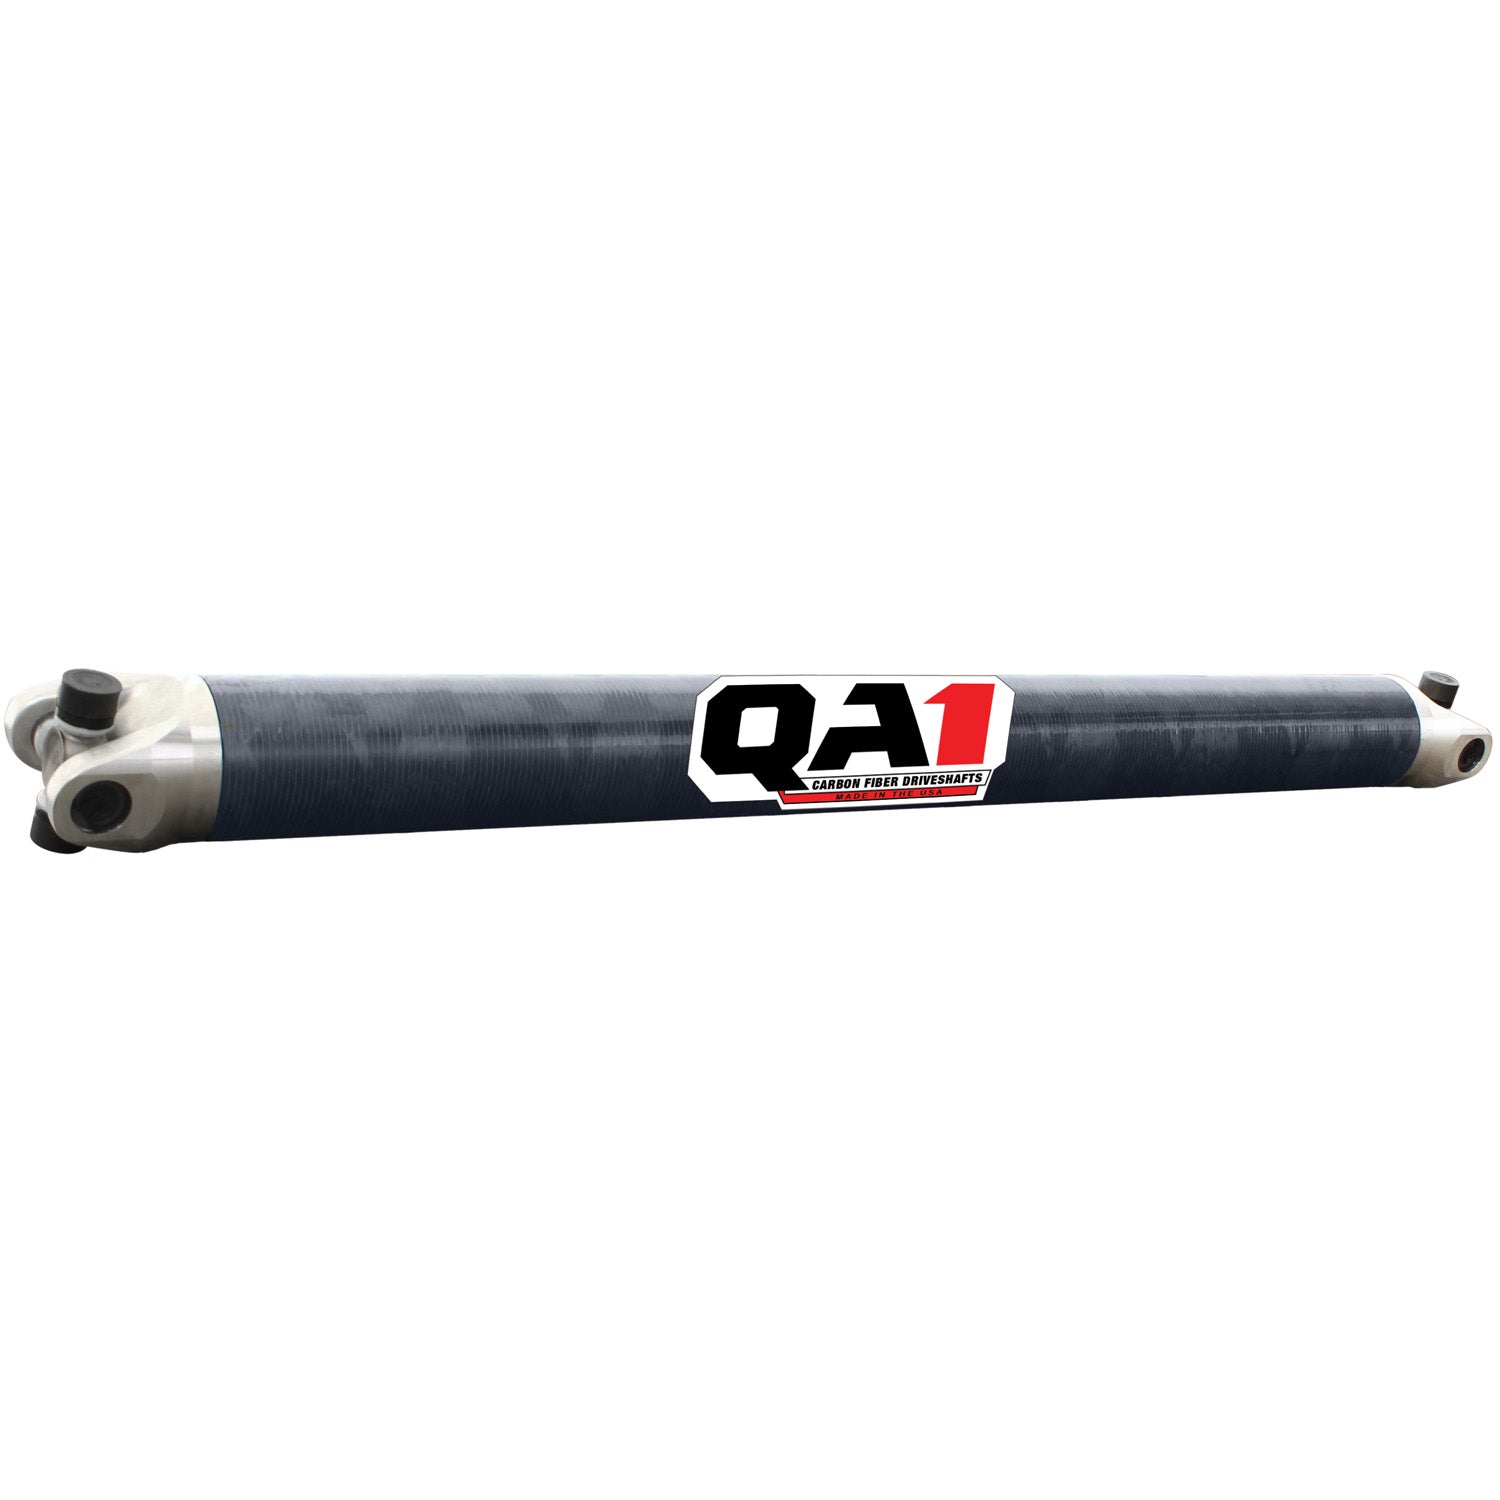 QA1 JJ-11234 Driveshaft, Cf, Ct-Dirt LM, 38.50 XM 3.2, 1310 U-Joint, 2600Lb.